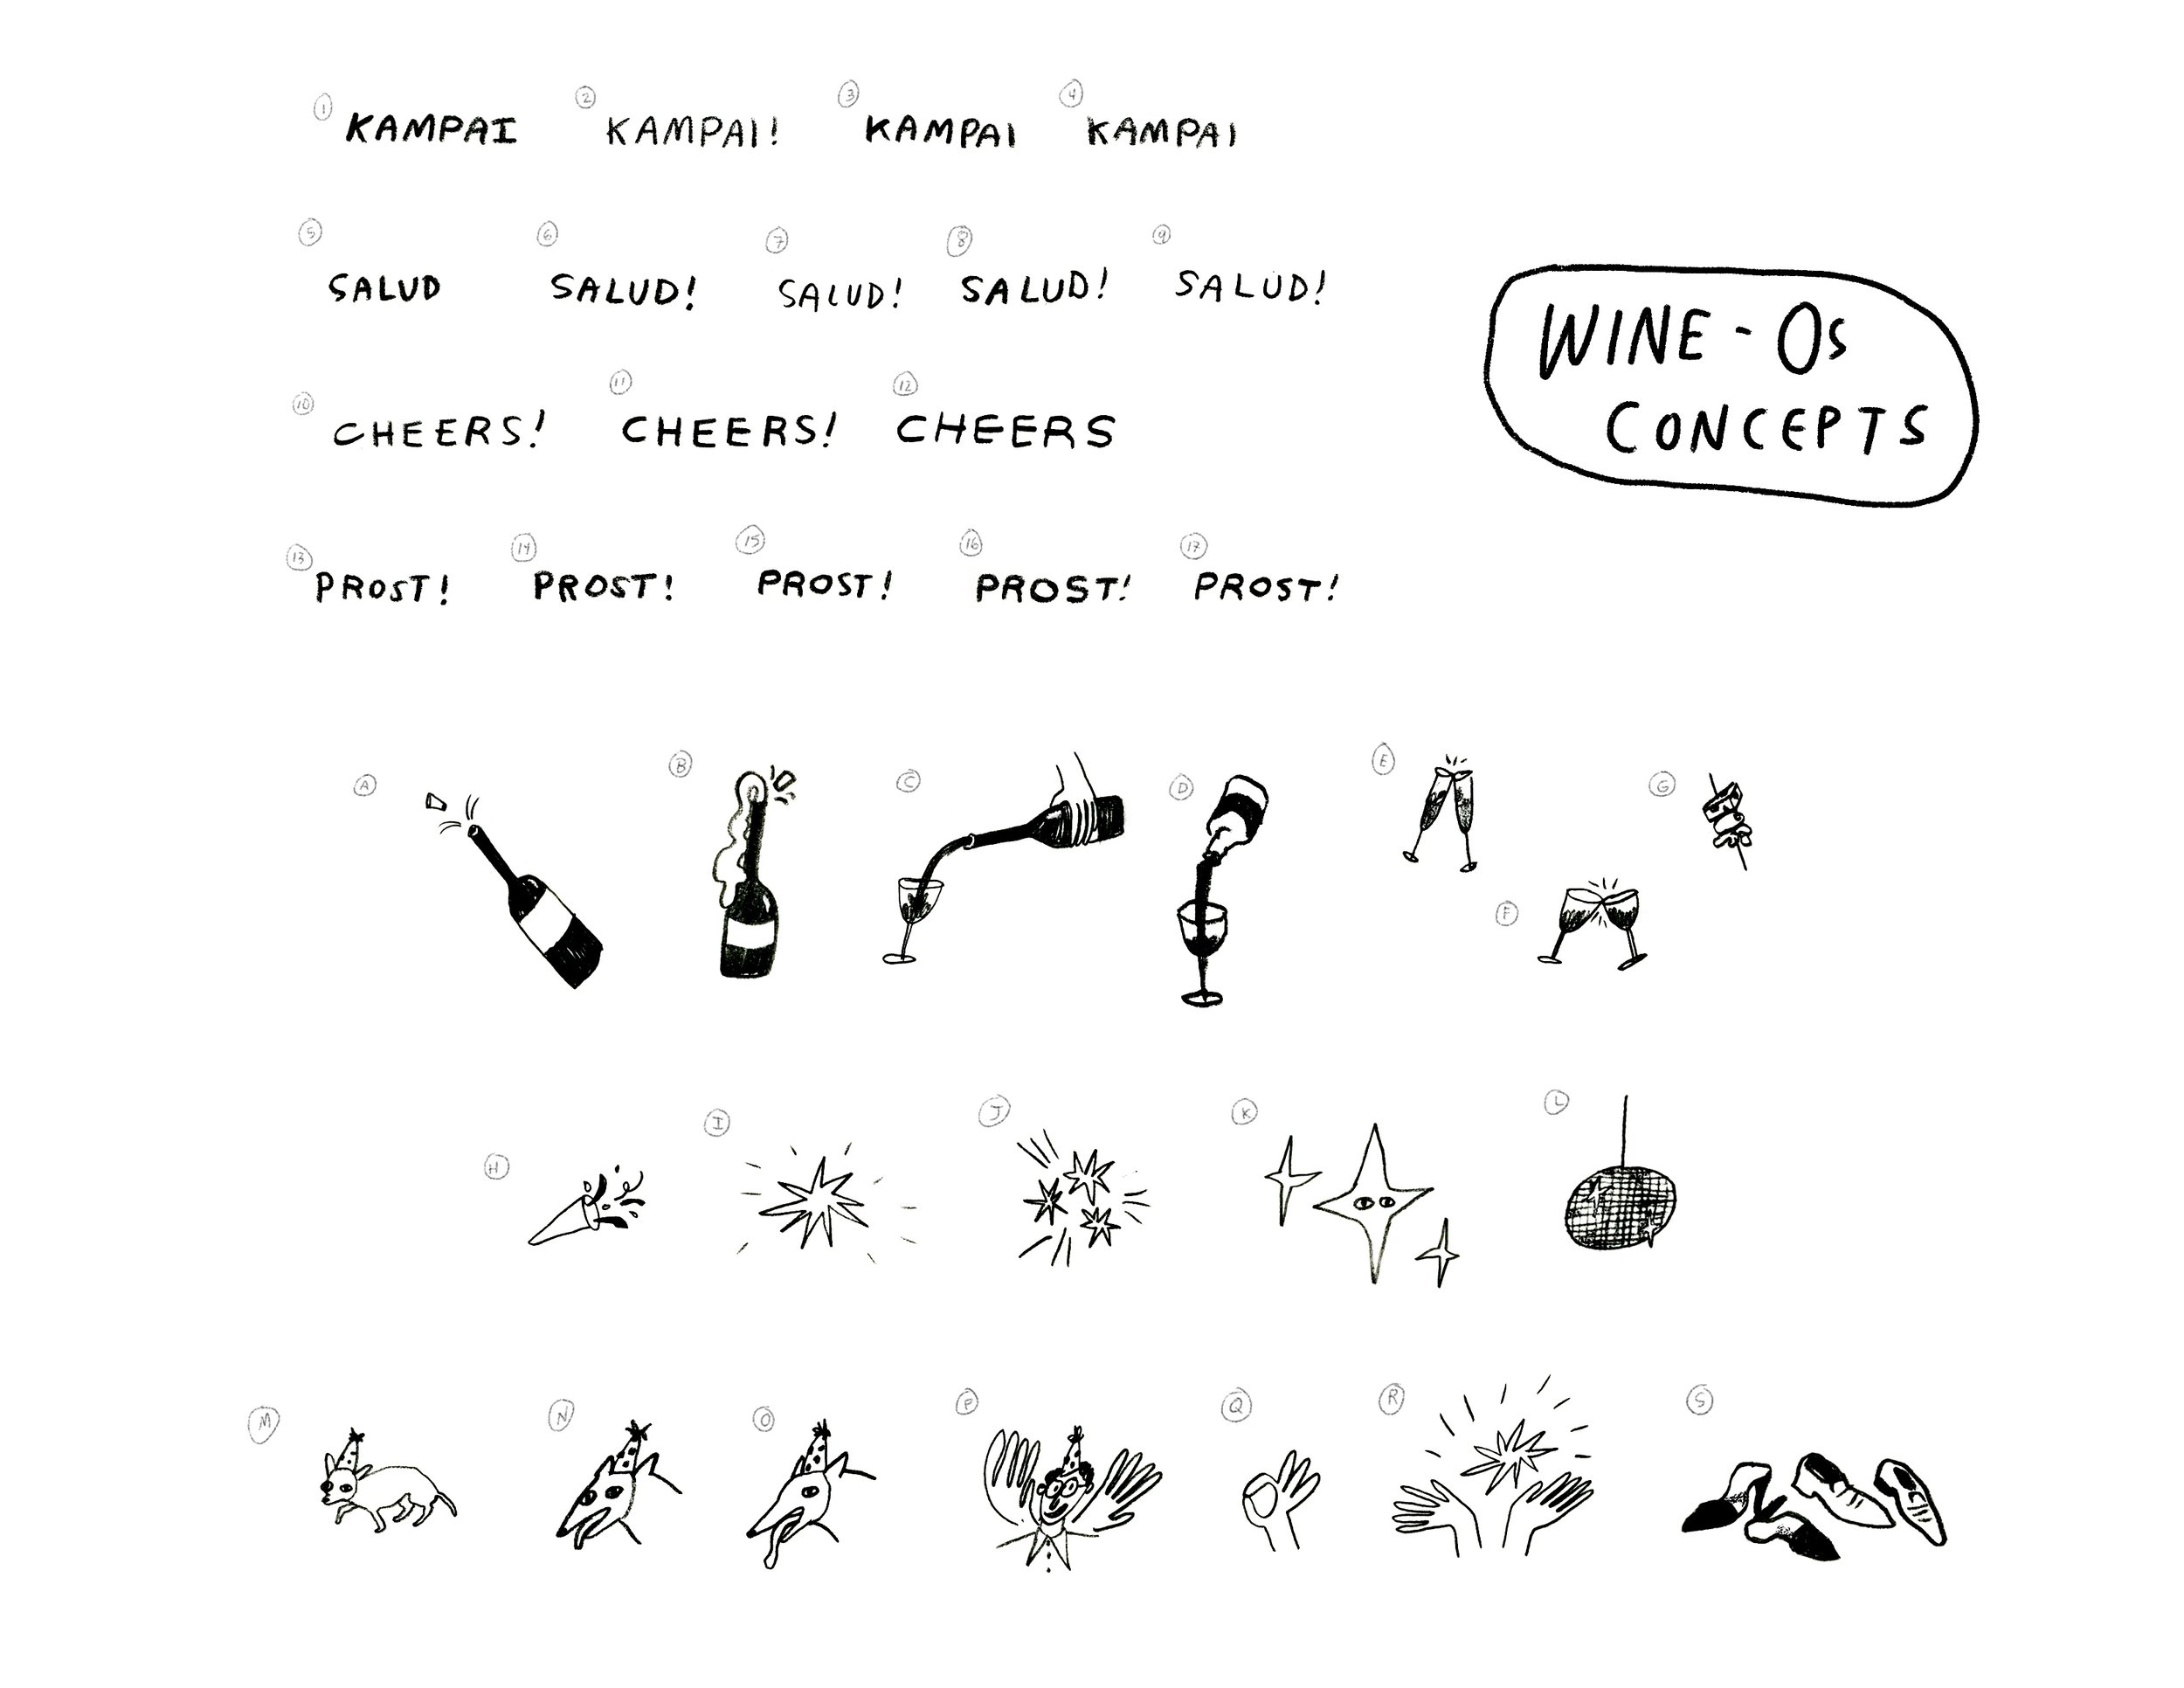 wine-os concepts.jpg